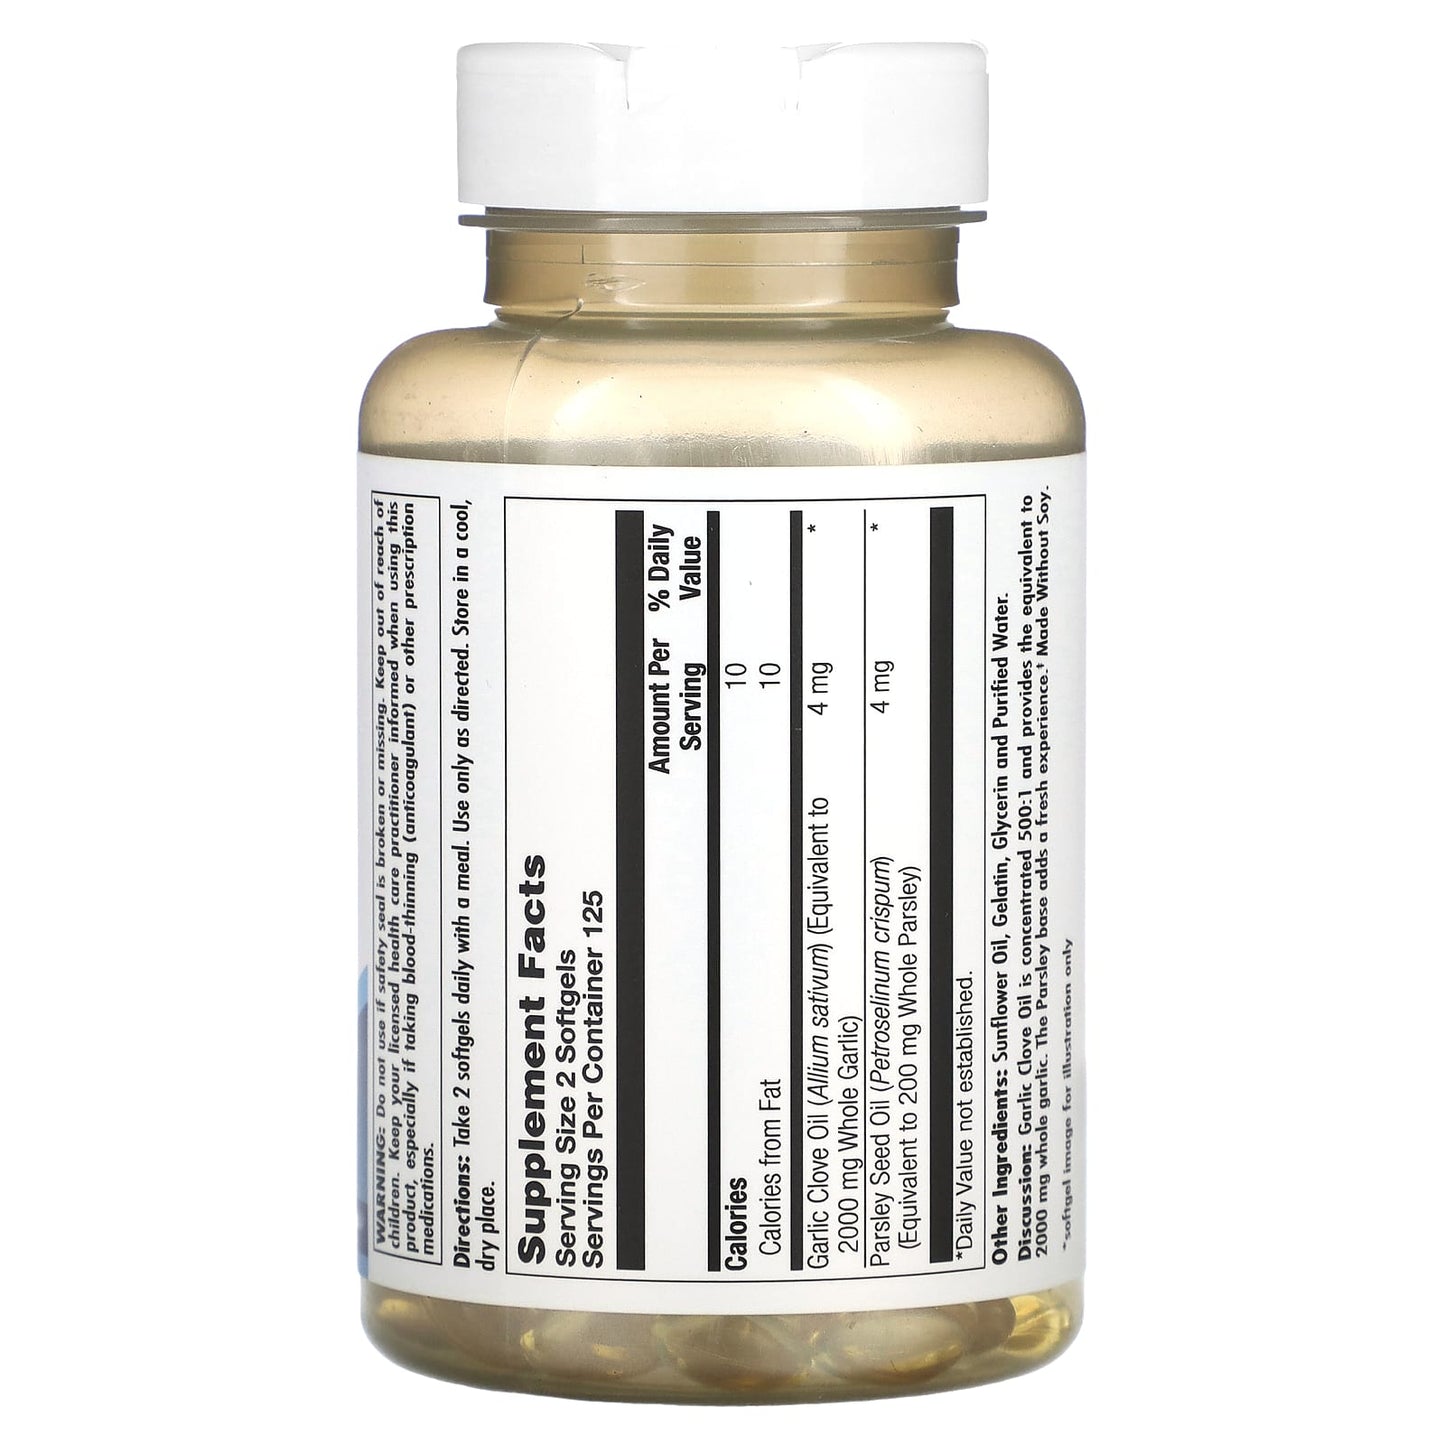 KAL, Garlic Oil, 2,000 mg, 250 Softgels